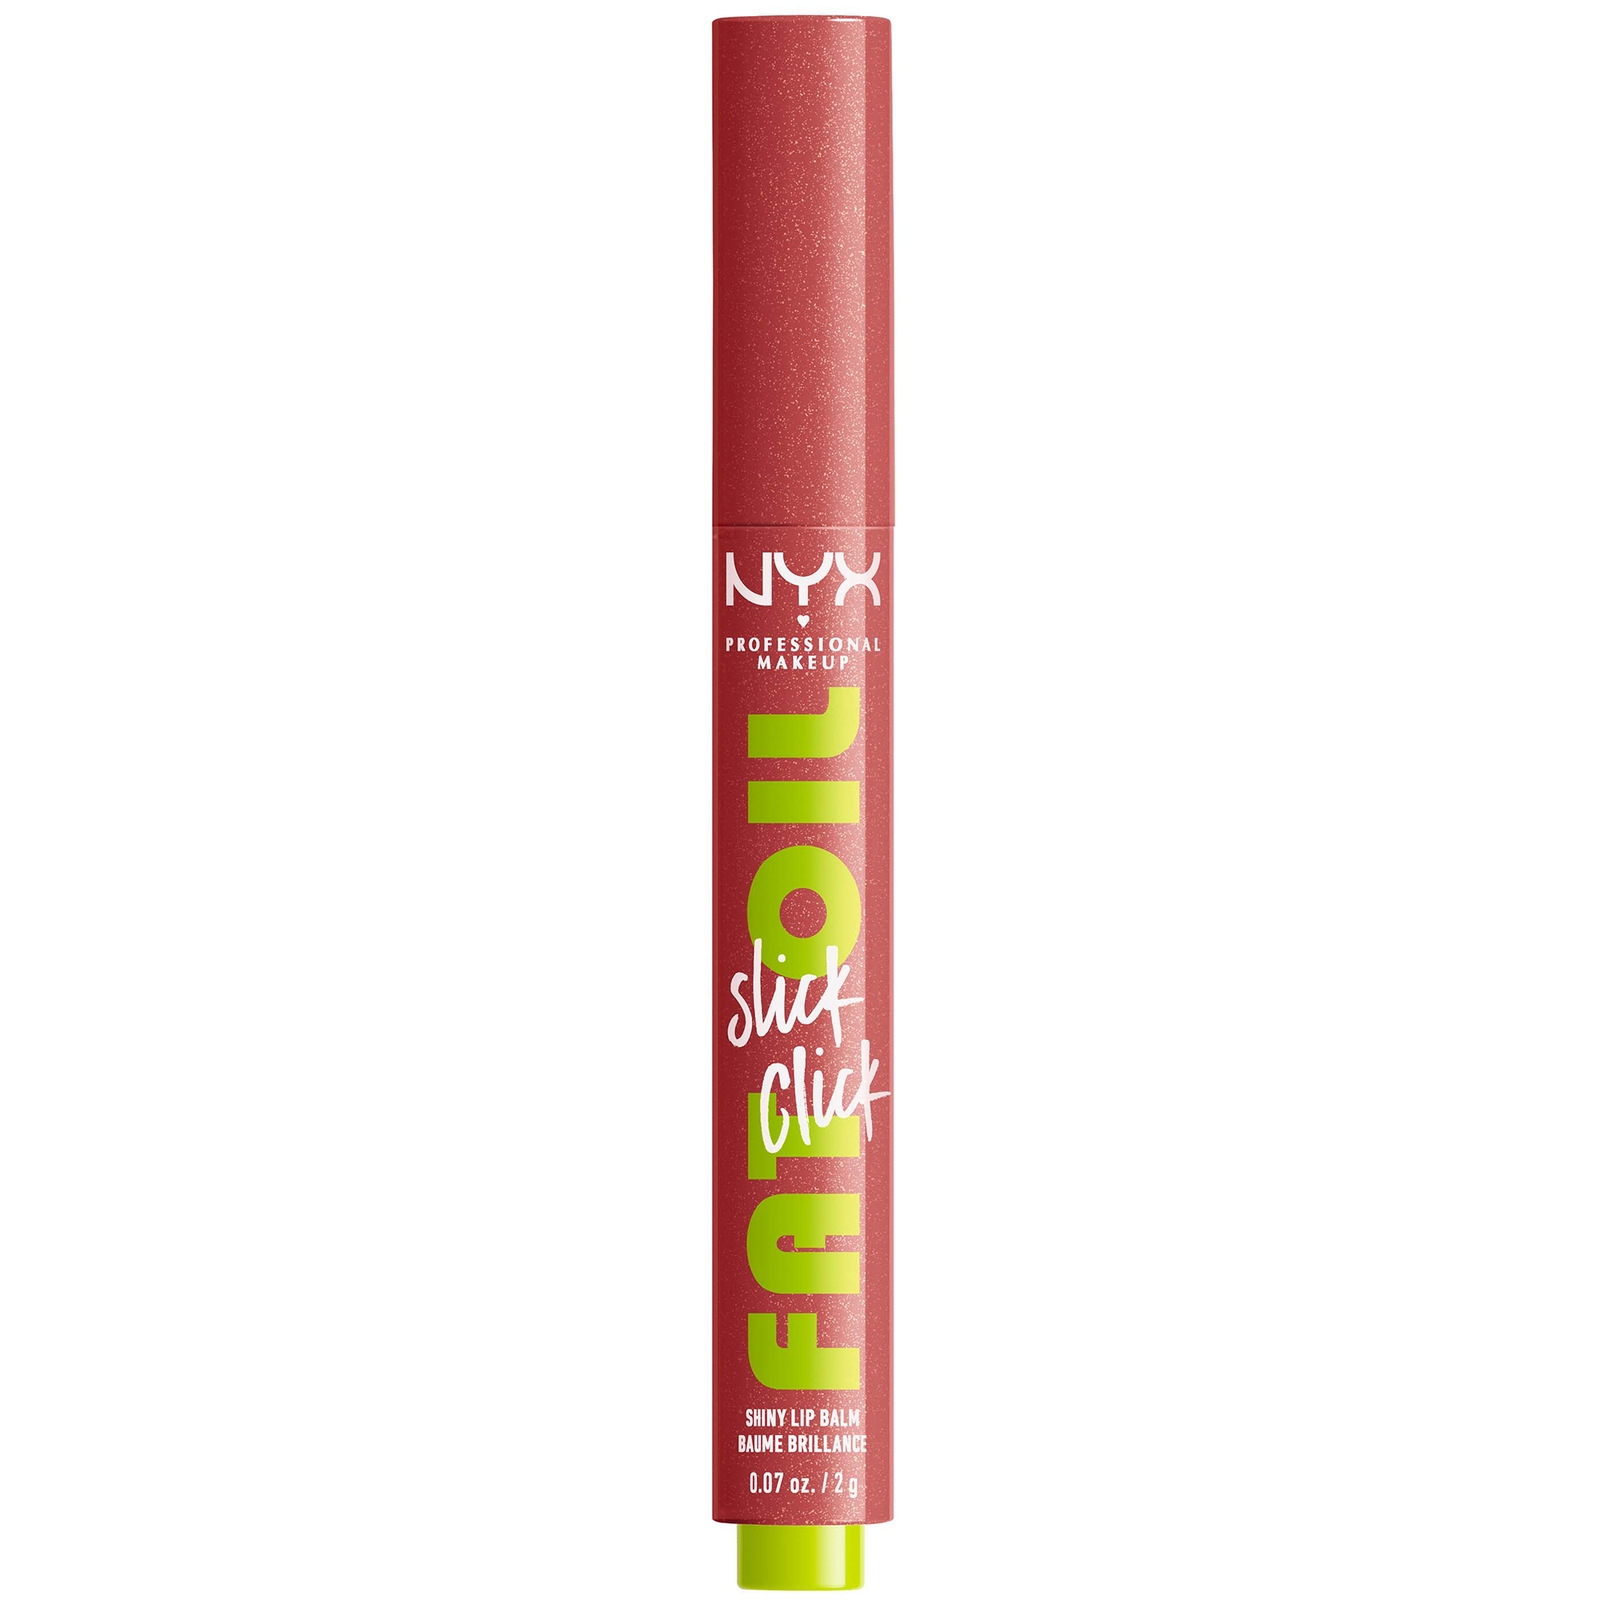 Nyx Professional Makeup Fat Oil Slick Click Lip Balm 2ml (various Shades) - No Filter Needed